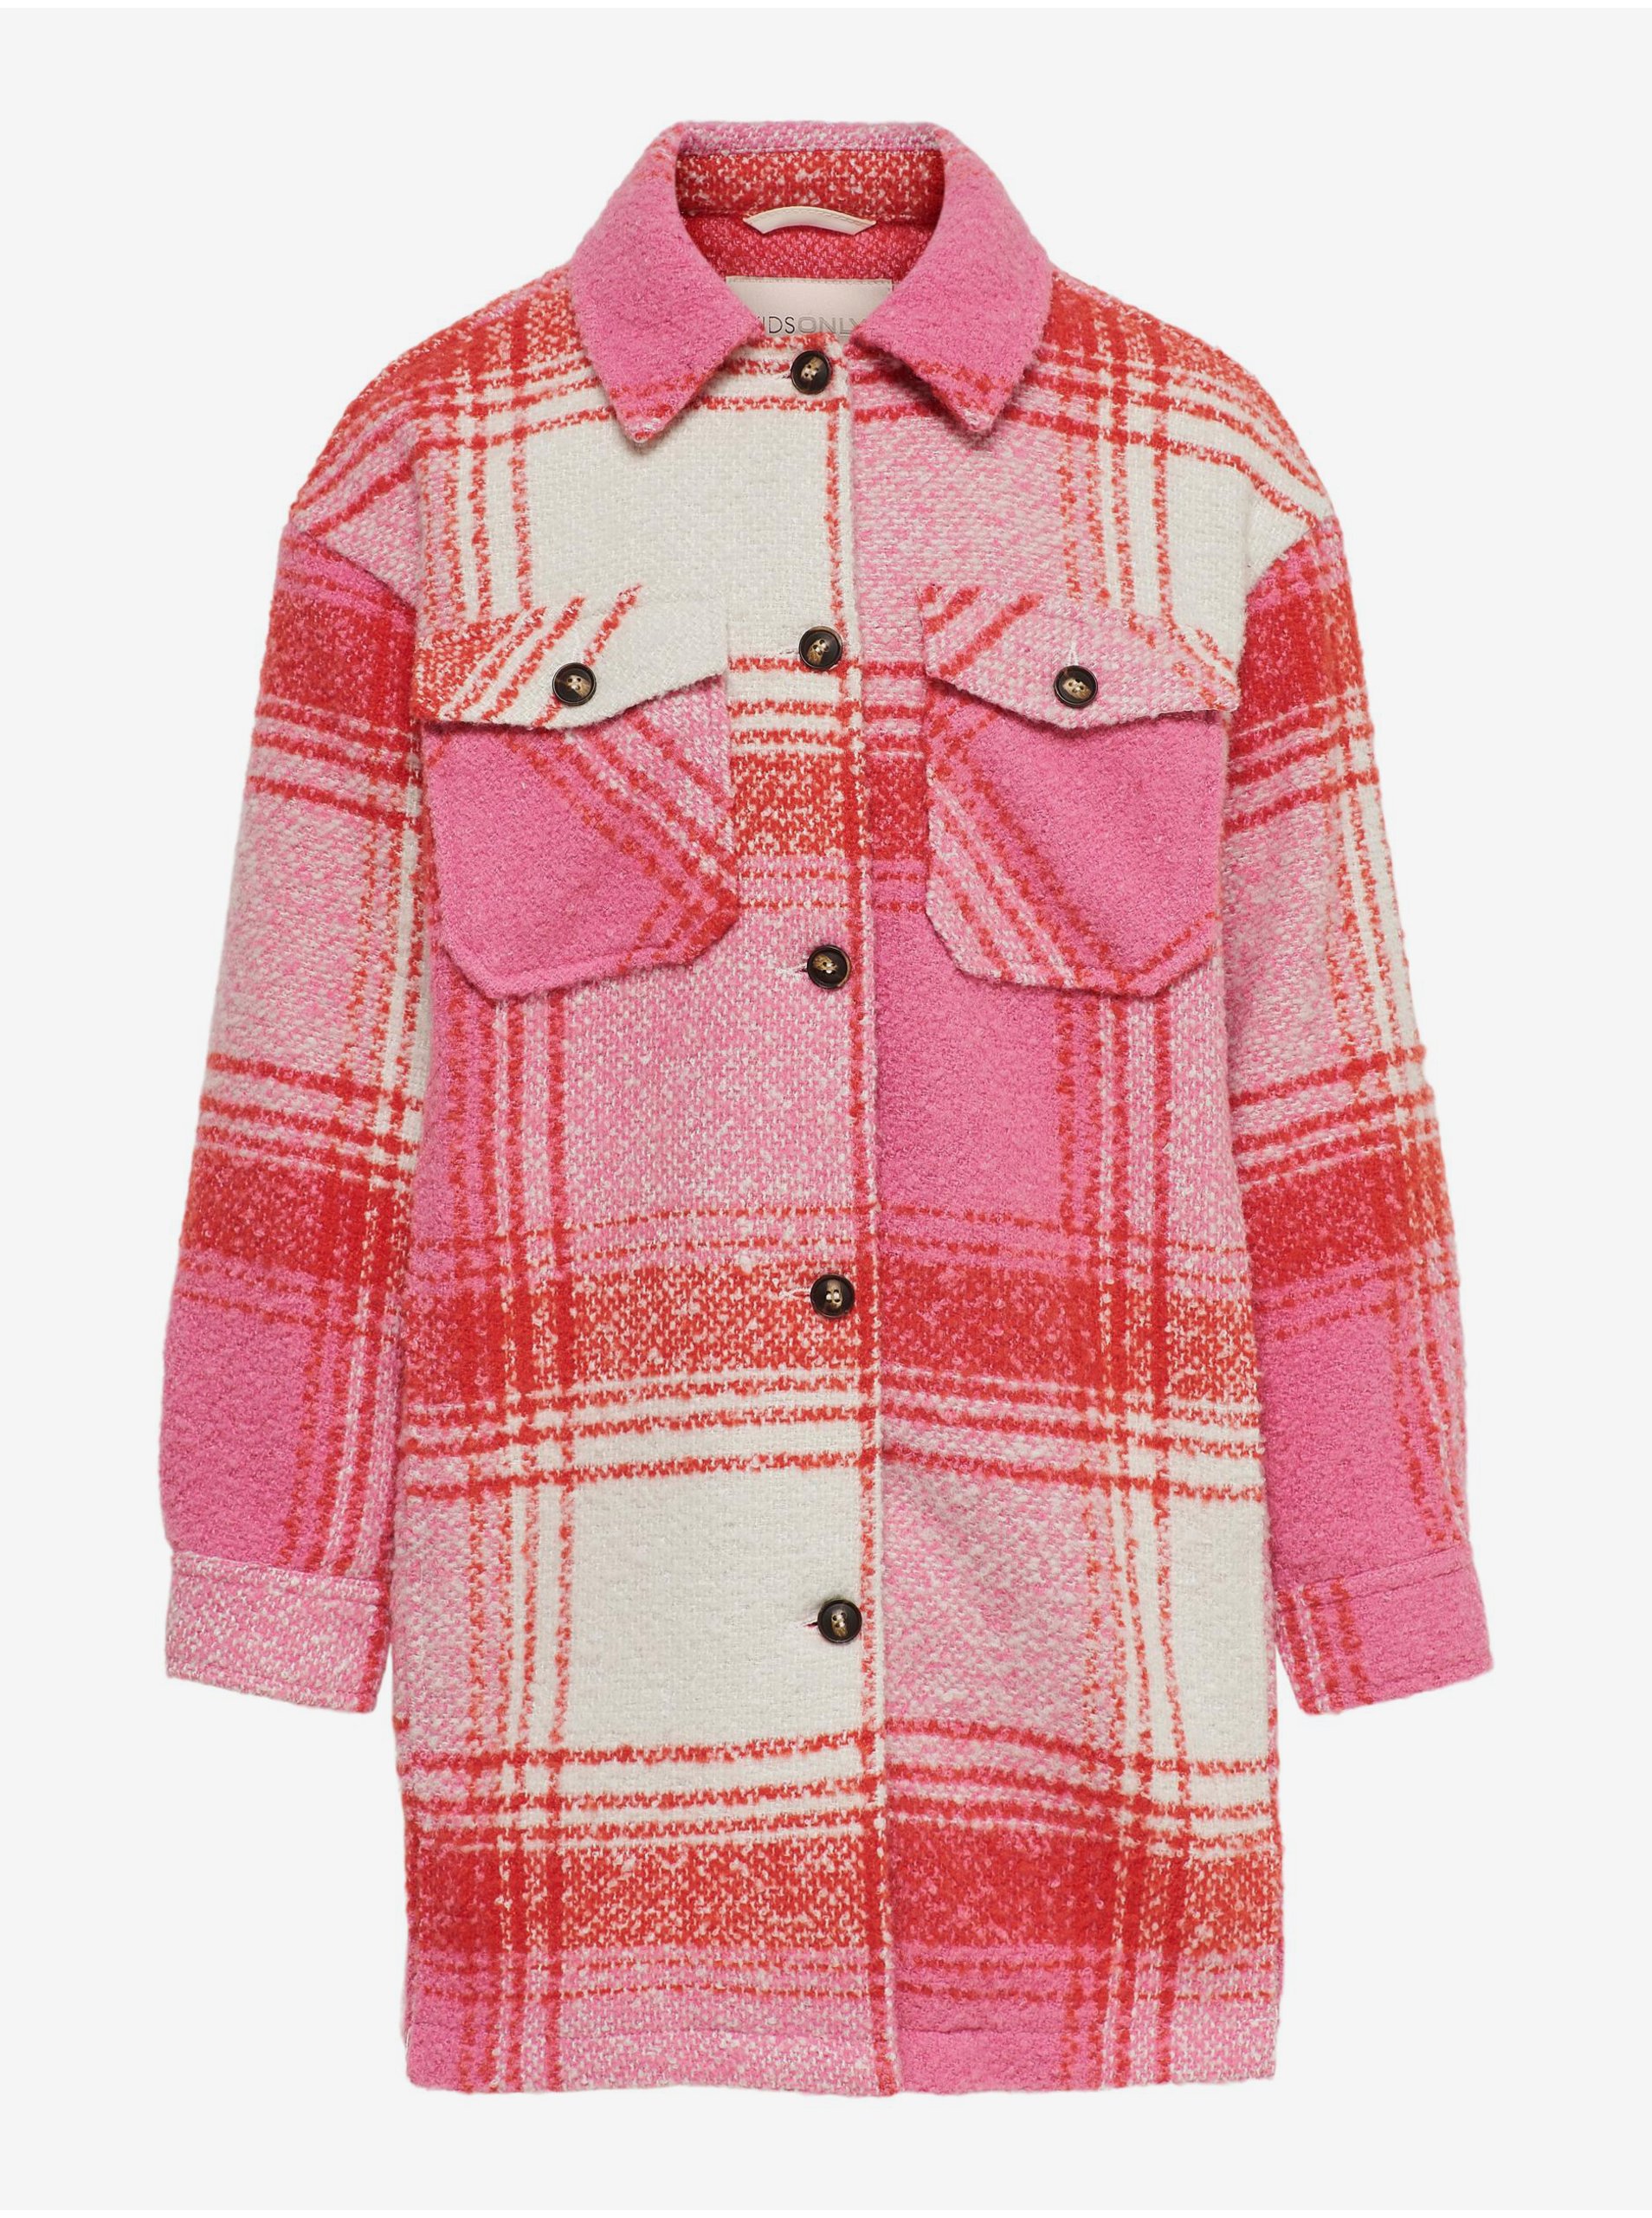 Lacno Ružová dievčenská kockovaná košeľová bunda ONLY Anja